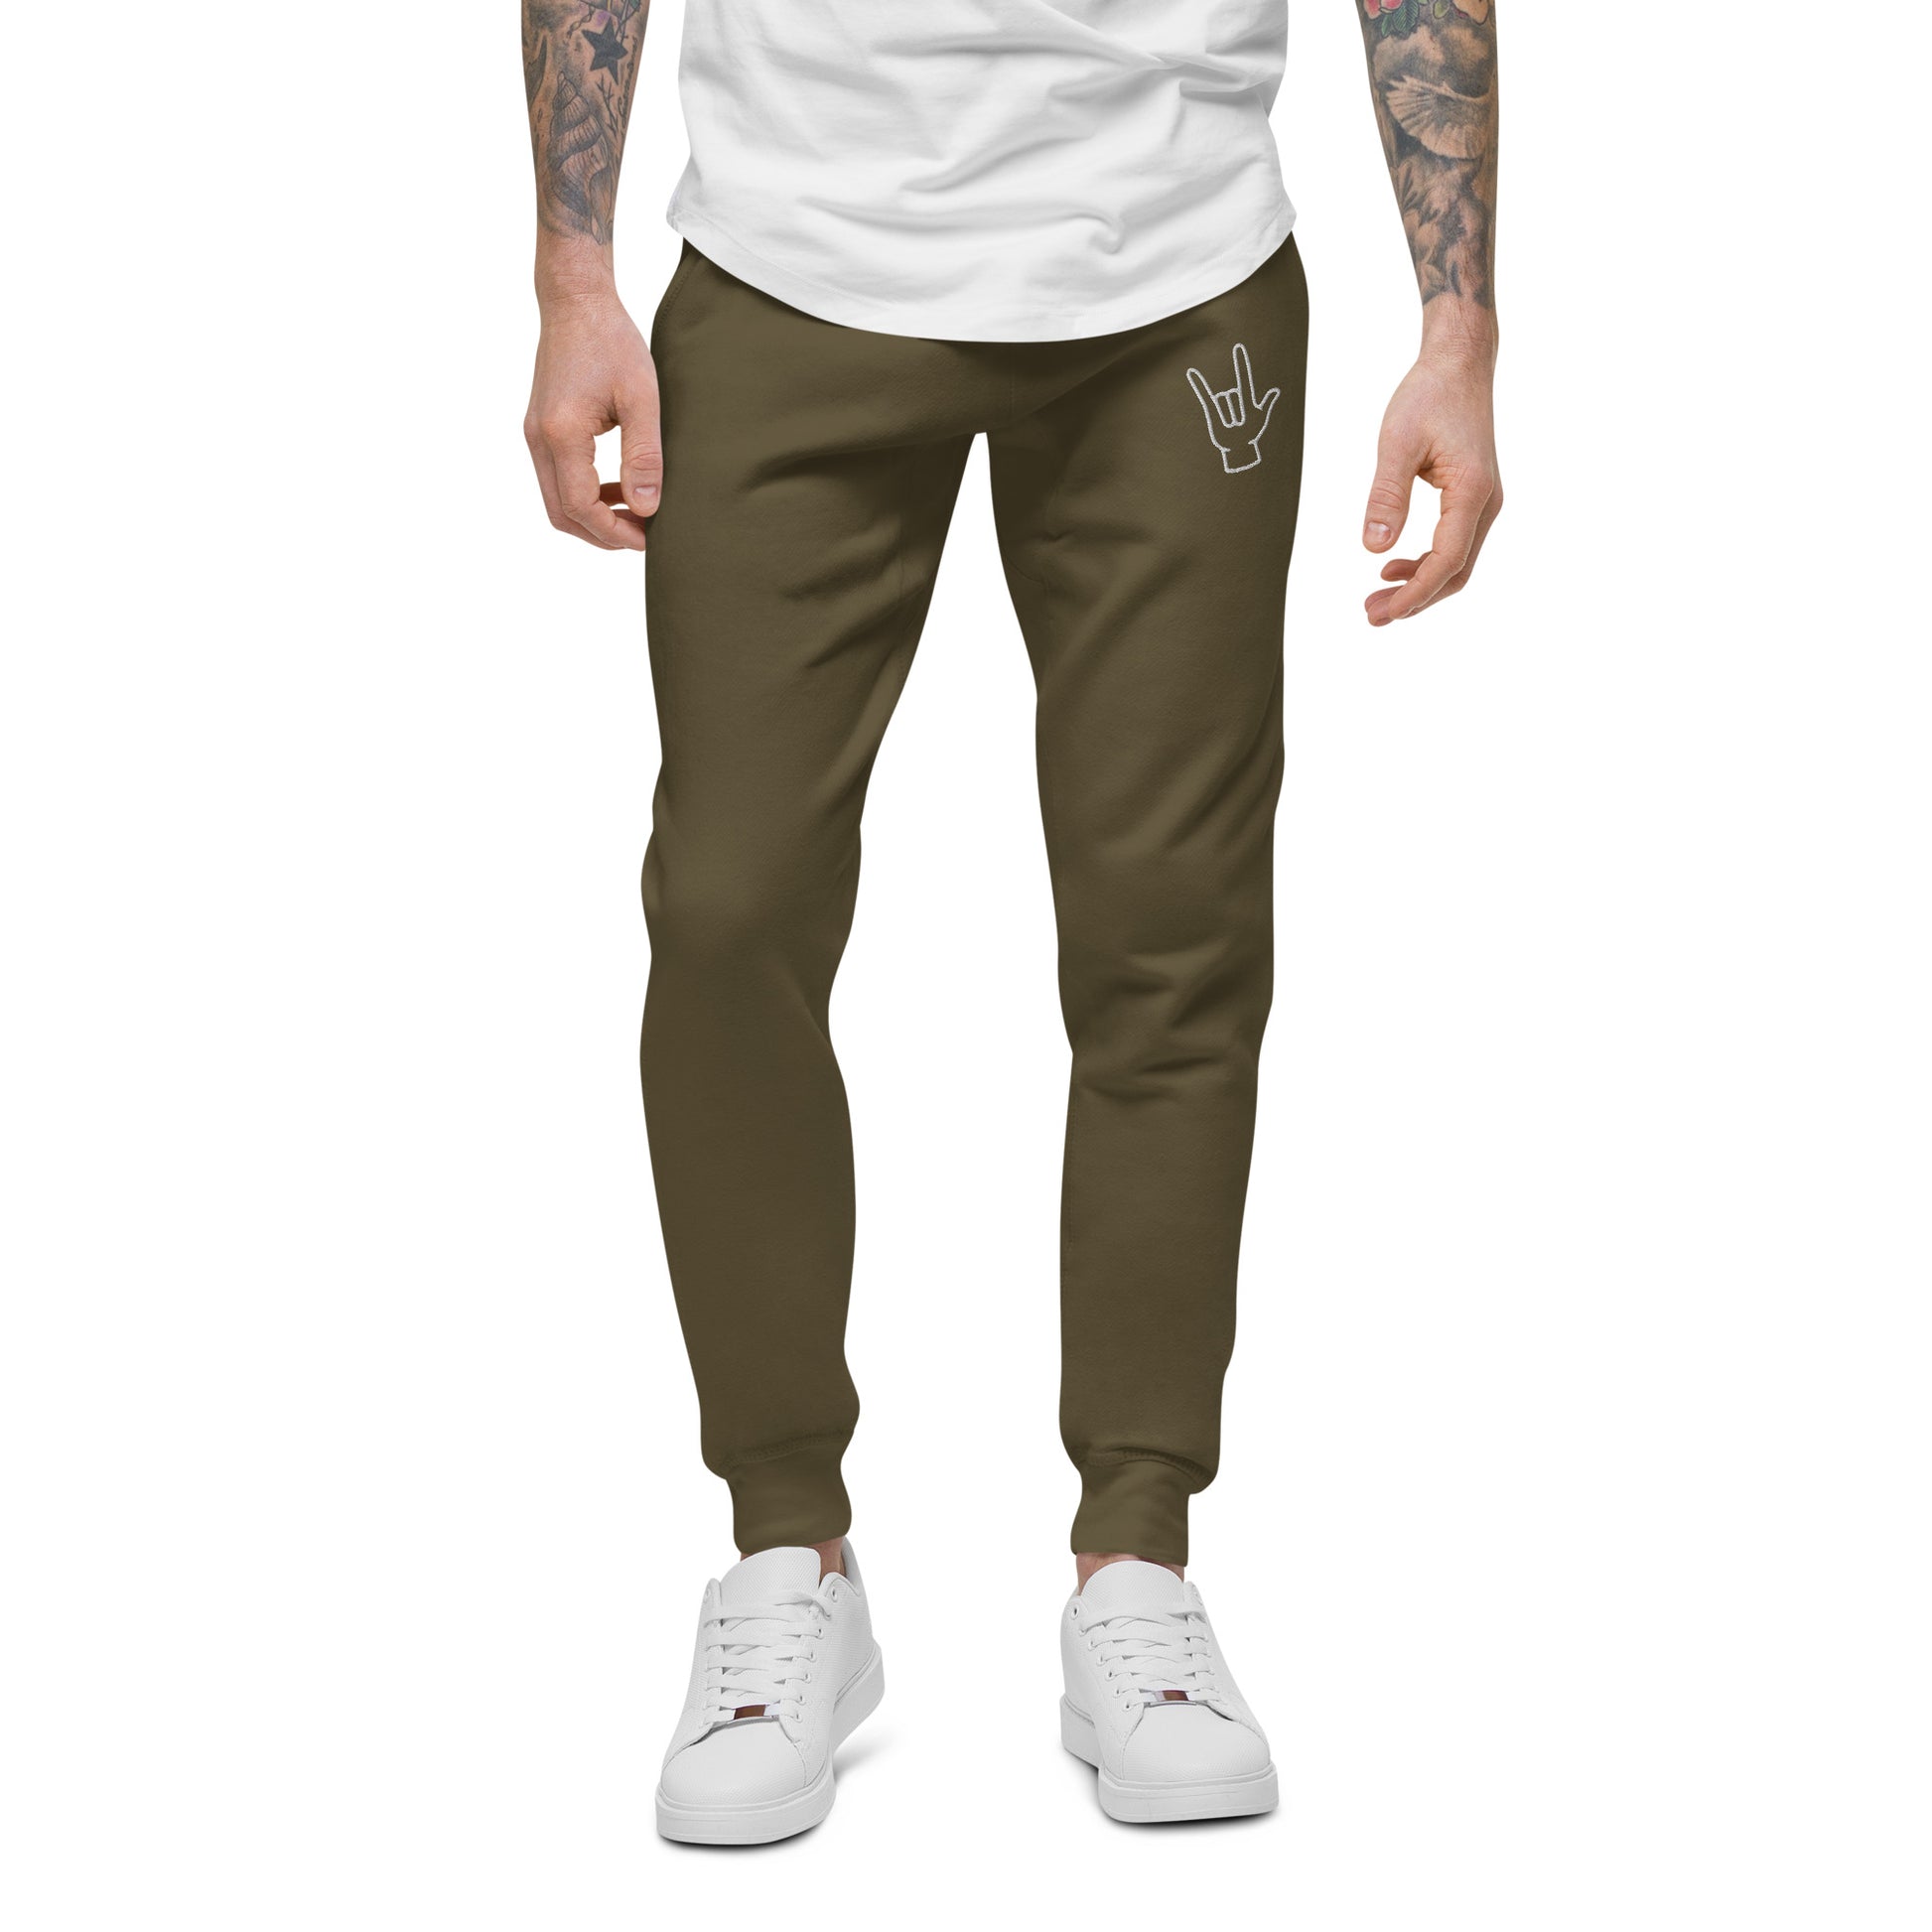 ILY Sweatpants - Comfortable Culture - Military Green / XS - Pants - Comfortable Culture